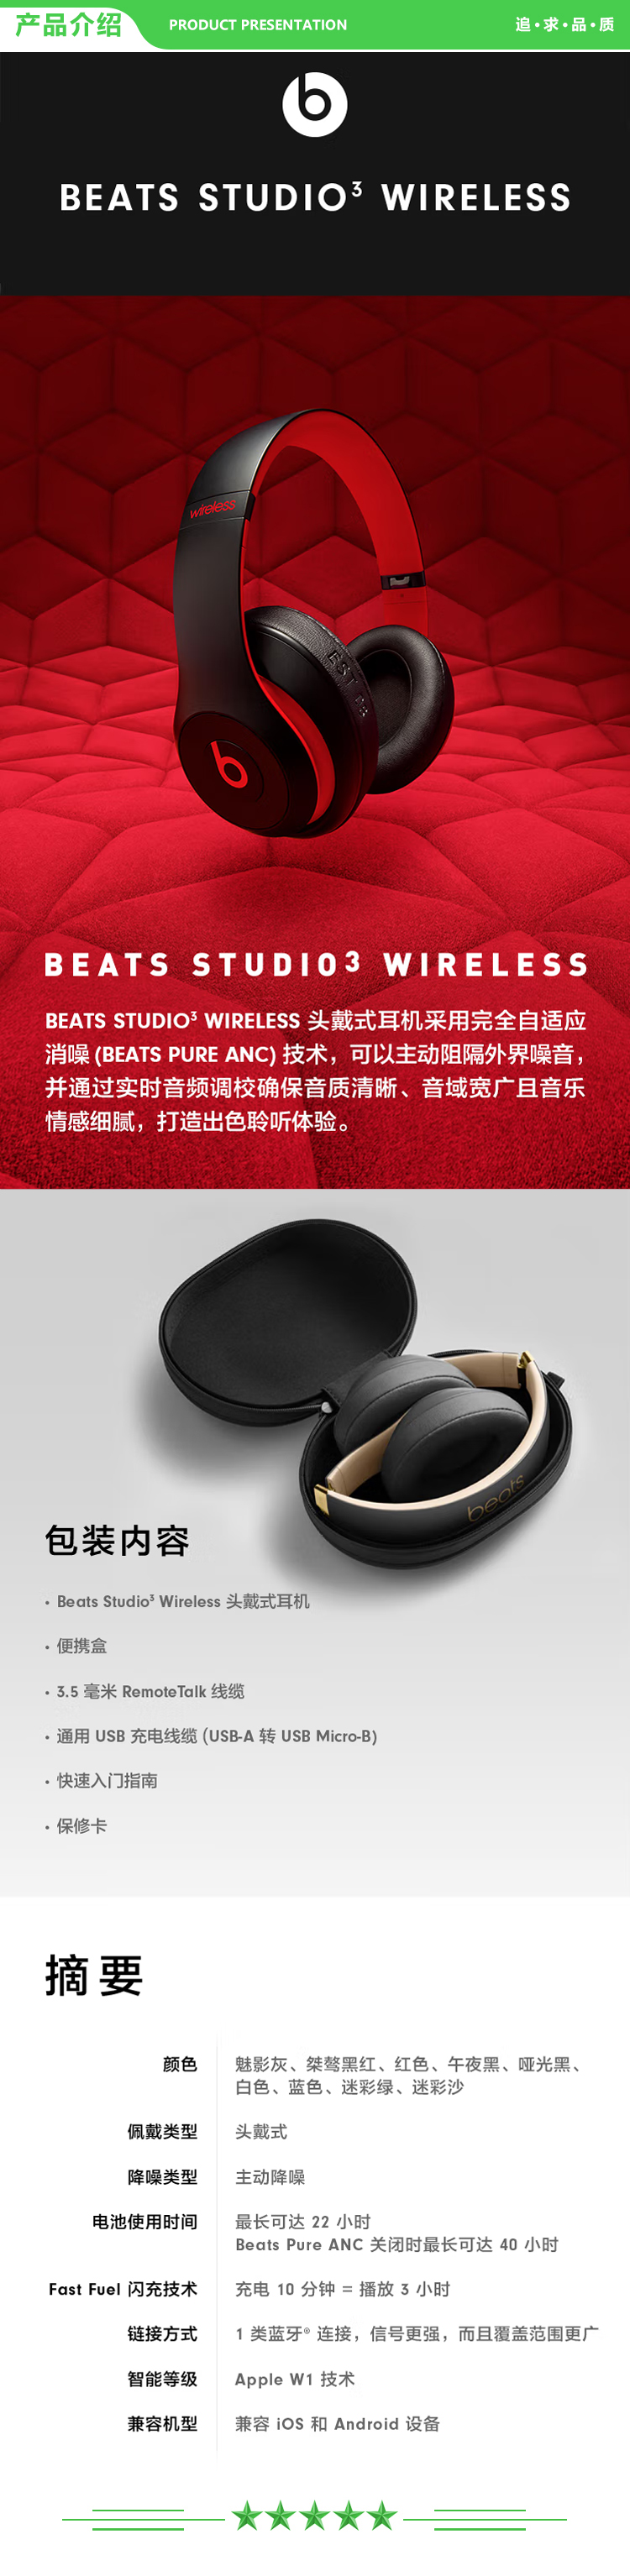 Beats Studio3 Wireless 哑光黑 录音师无线3 头戴式 蓝牙无线降噪耳机 游戏耳机 .jpg